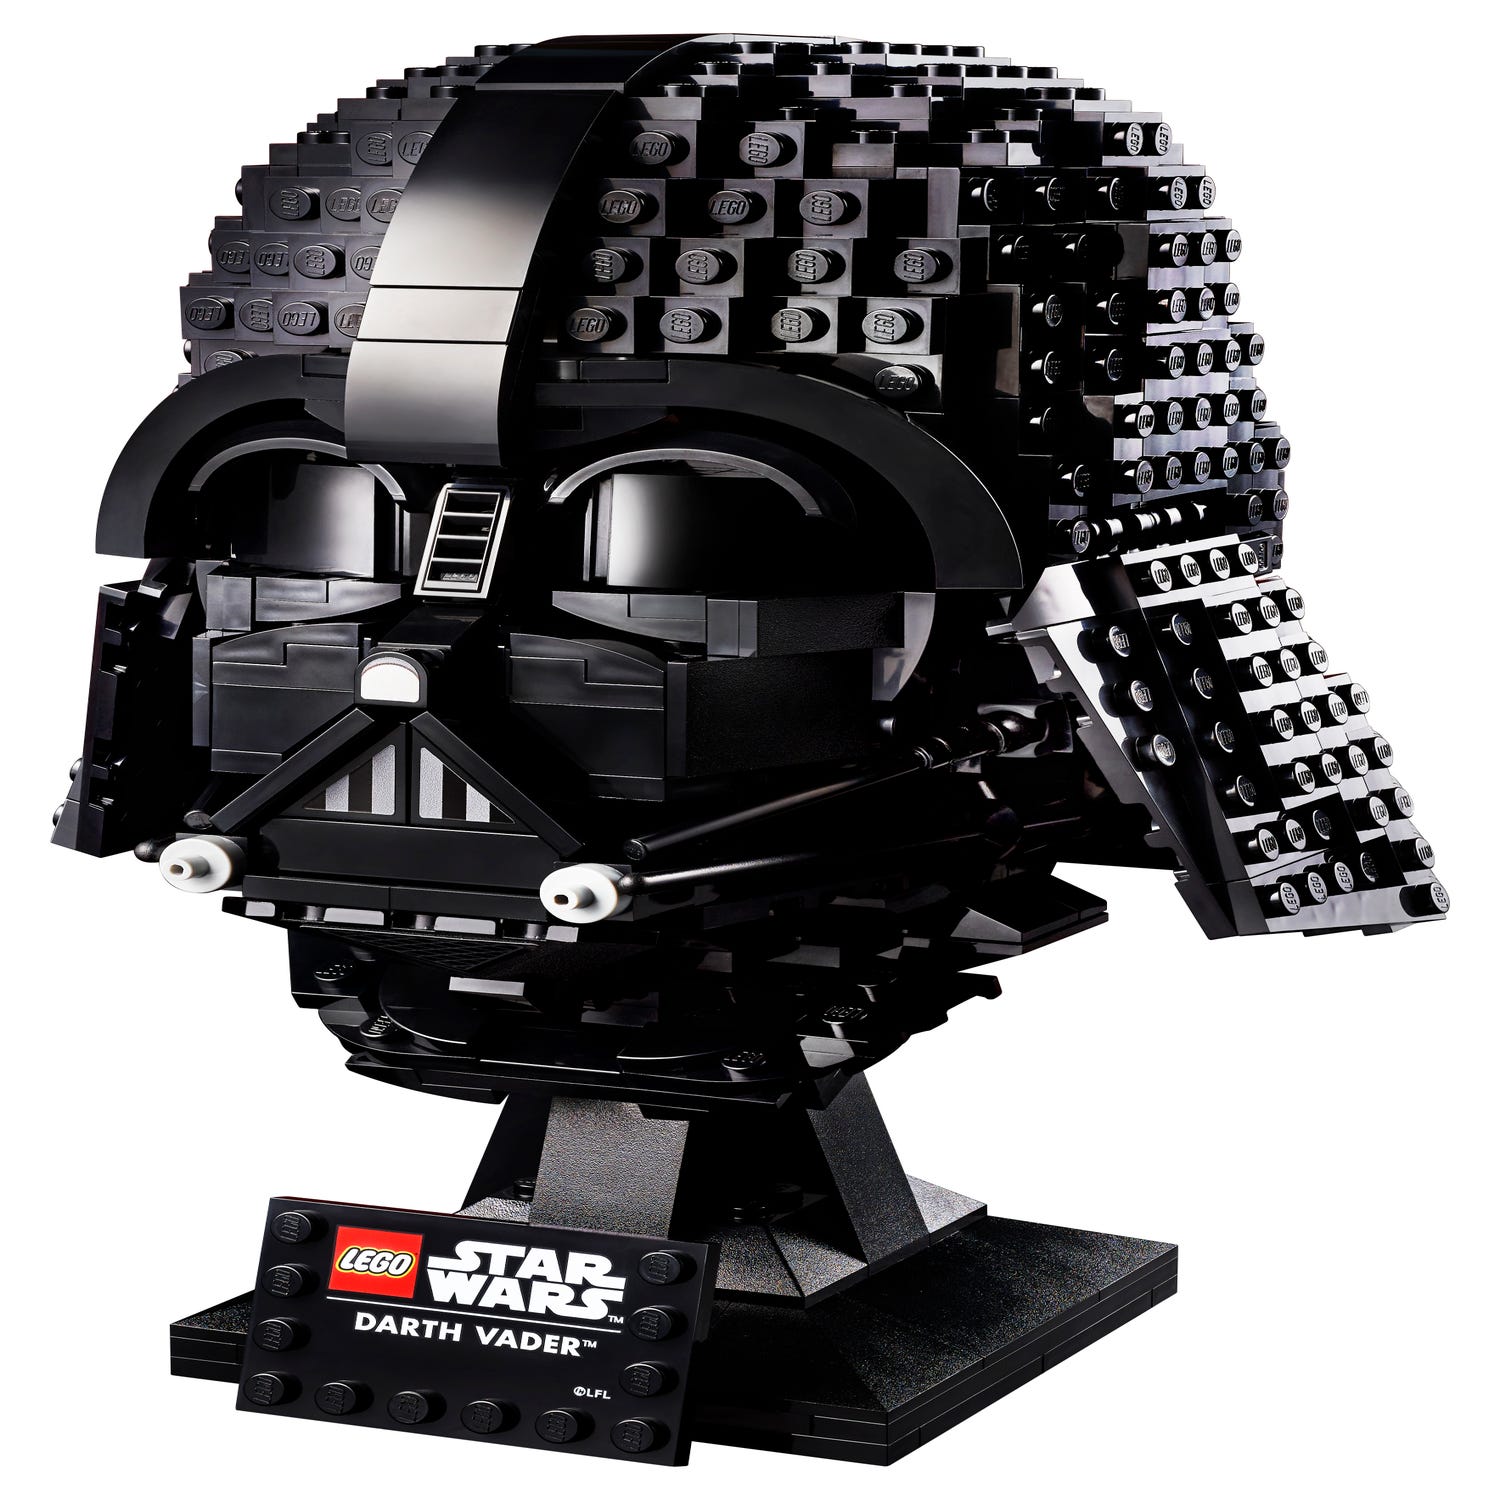 Darth Helmet 75304 | Star Buy online at the LEGO® Shop US